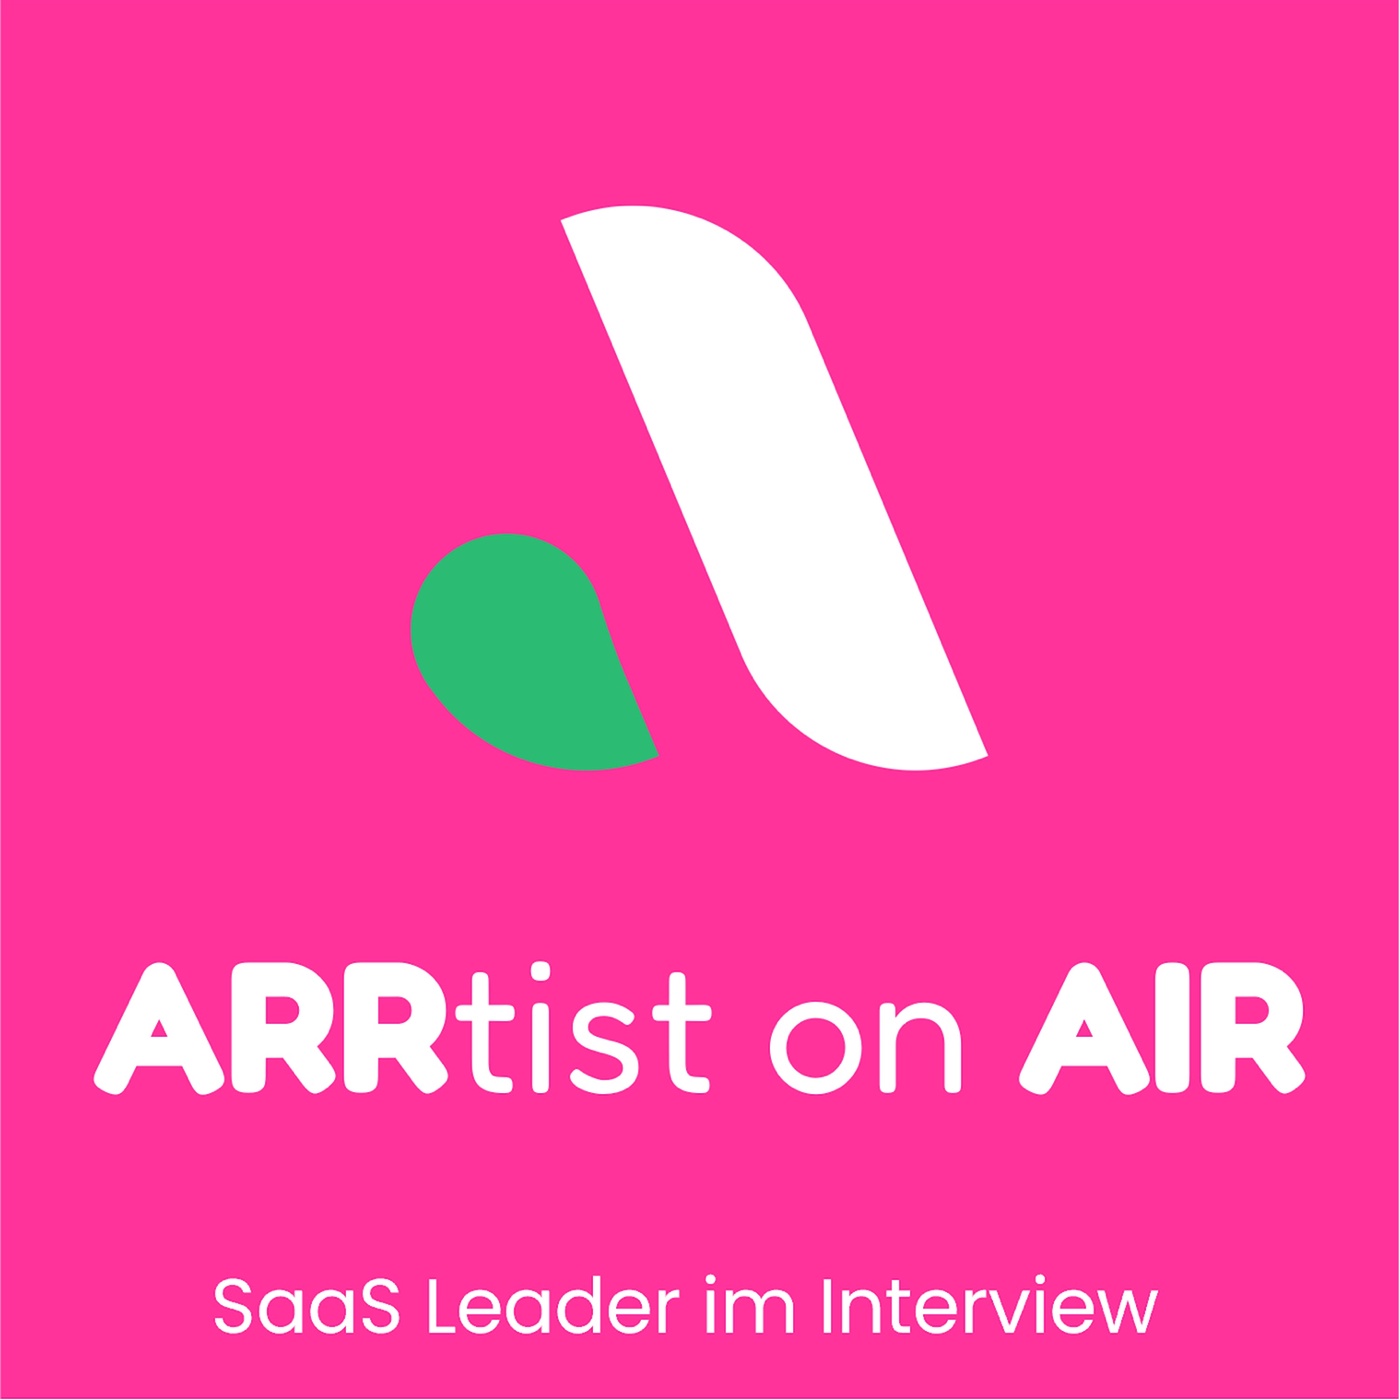 ARRtist on AIR - SaaS Leader im Interview